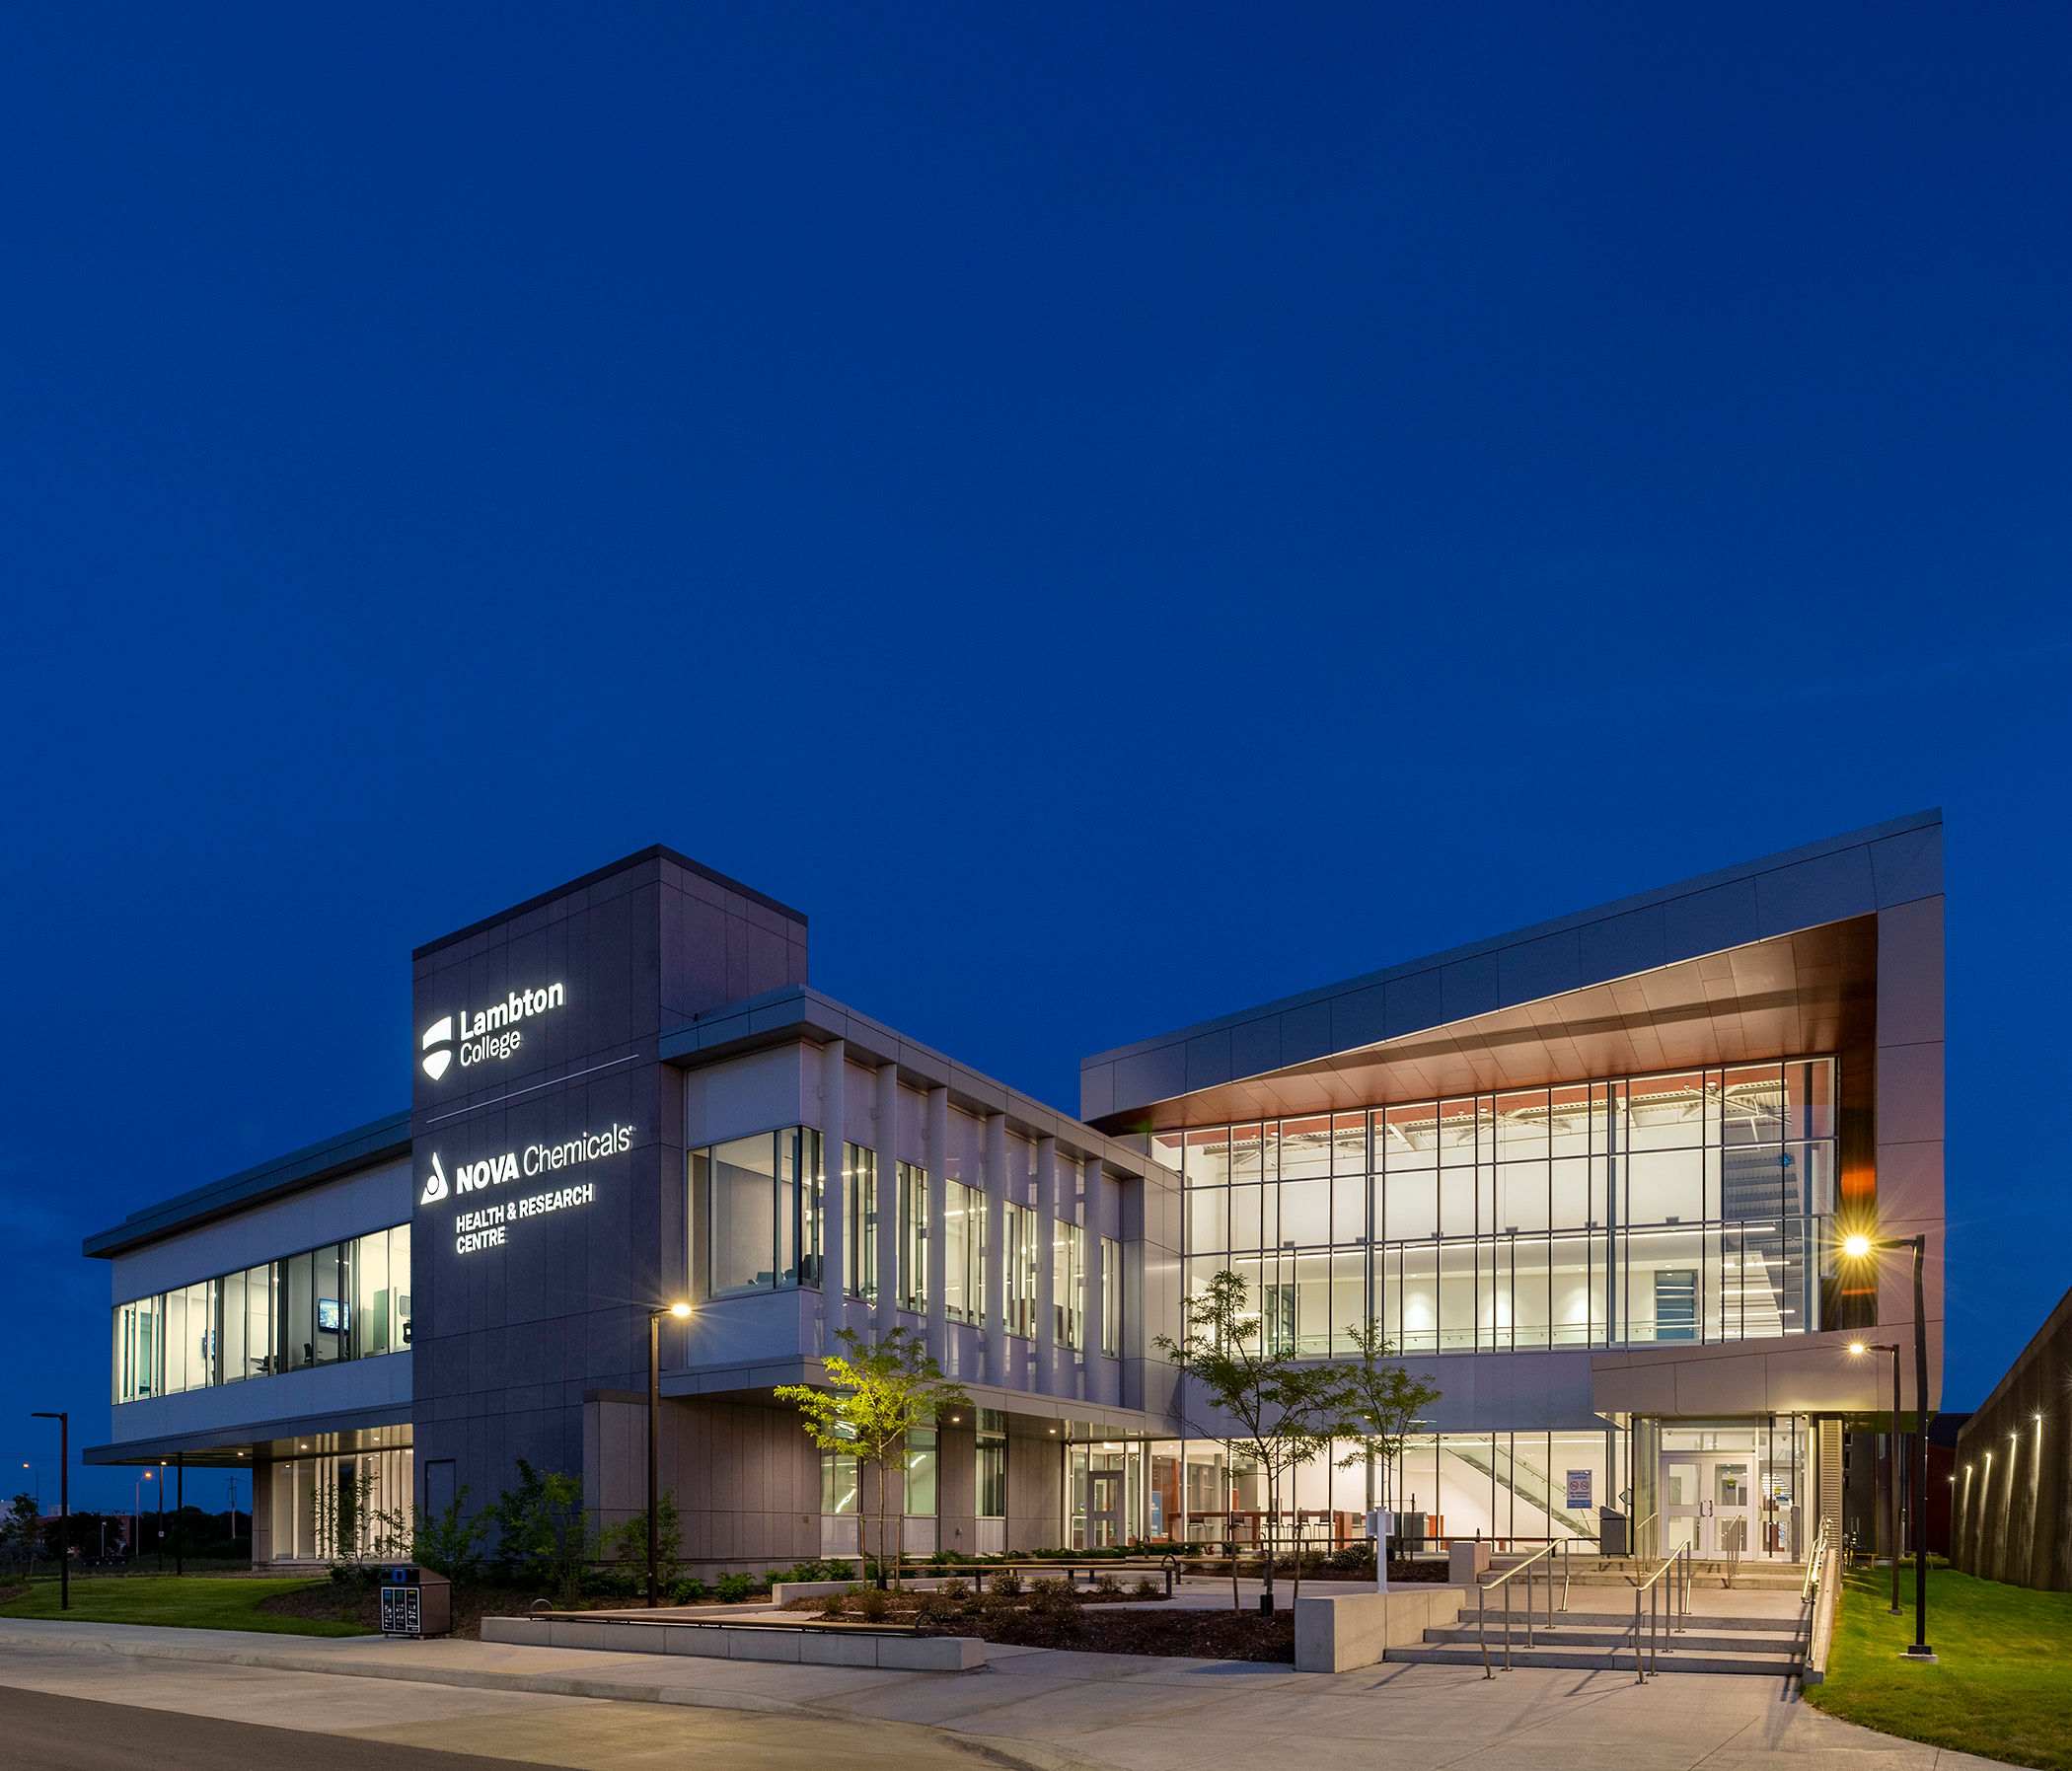 Alternate angle of main Lambton College south building in Sarnia, Ontario.